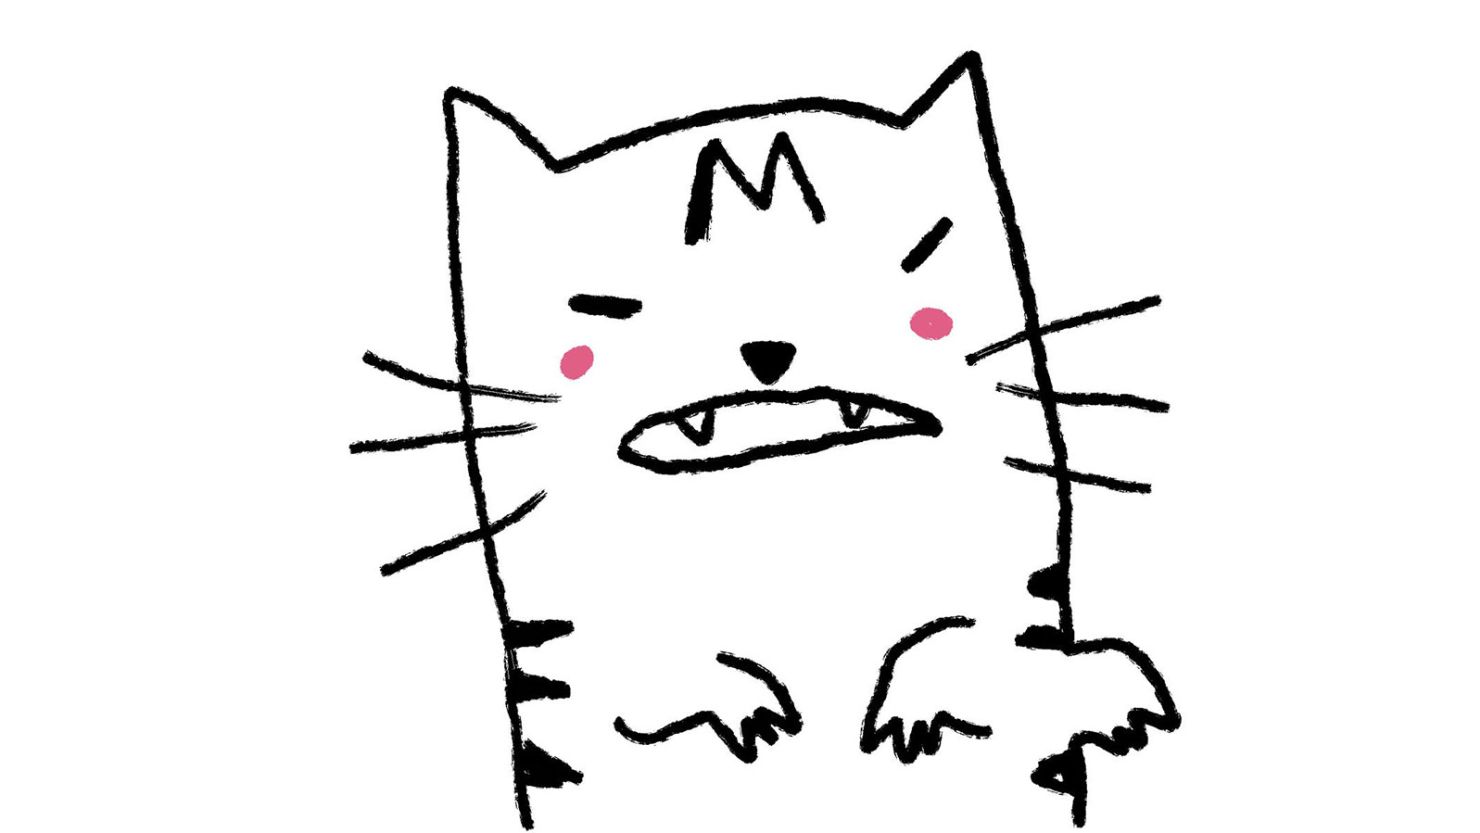 Li's profile image is a cartoon cat.